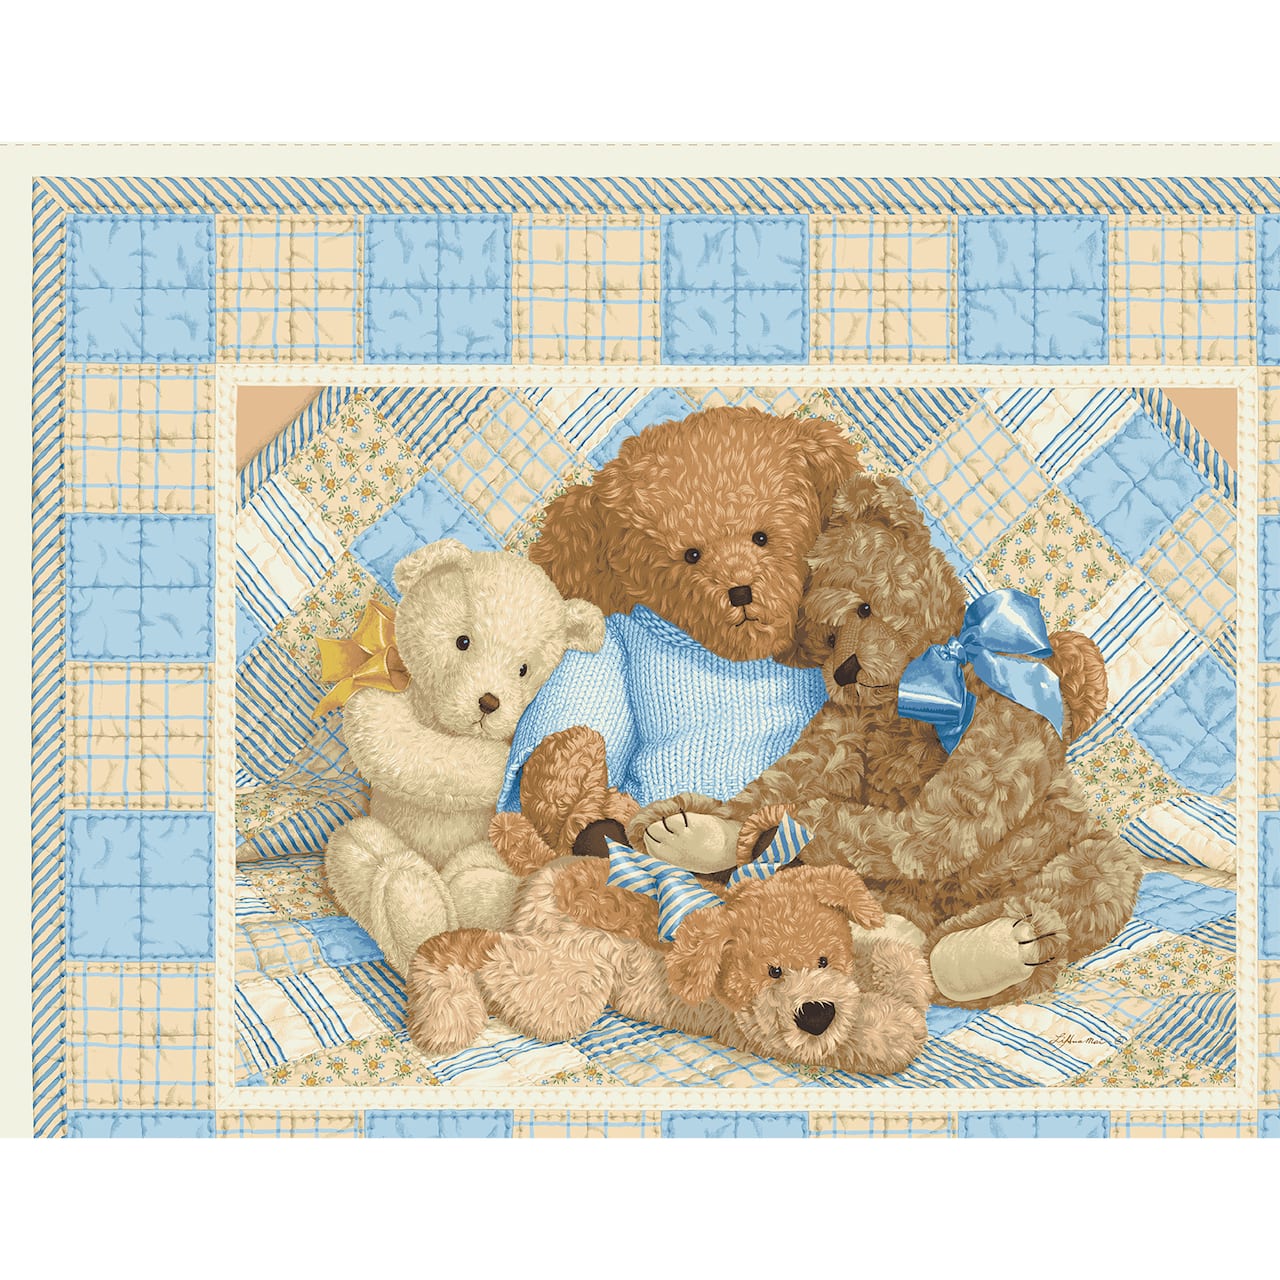 Fabric Traditions Blue Teddy Bear Panel Cotton Fabric